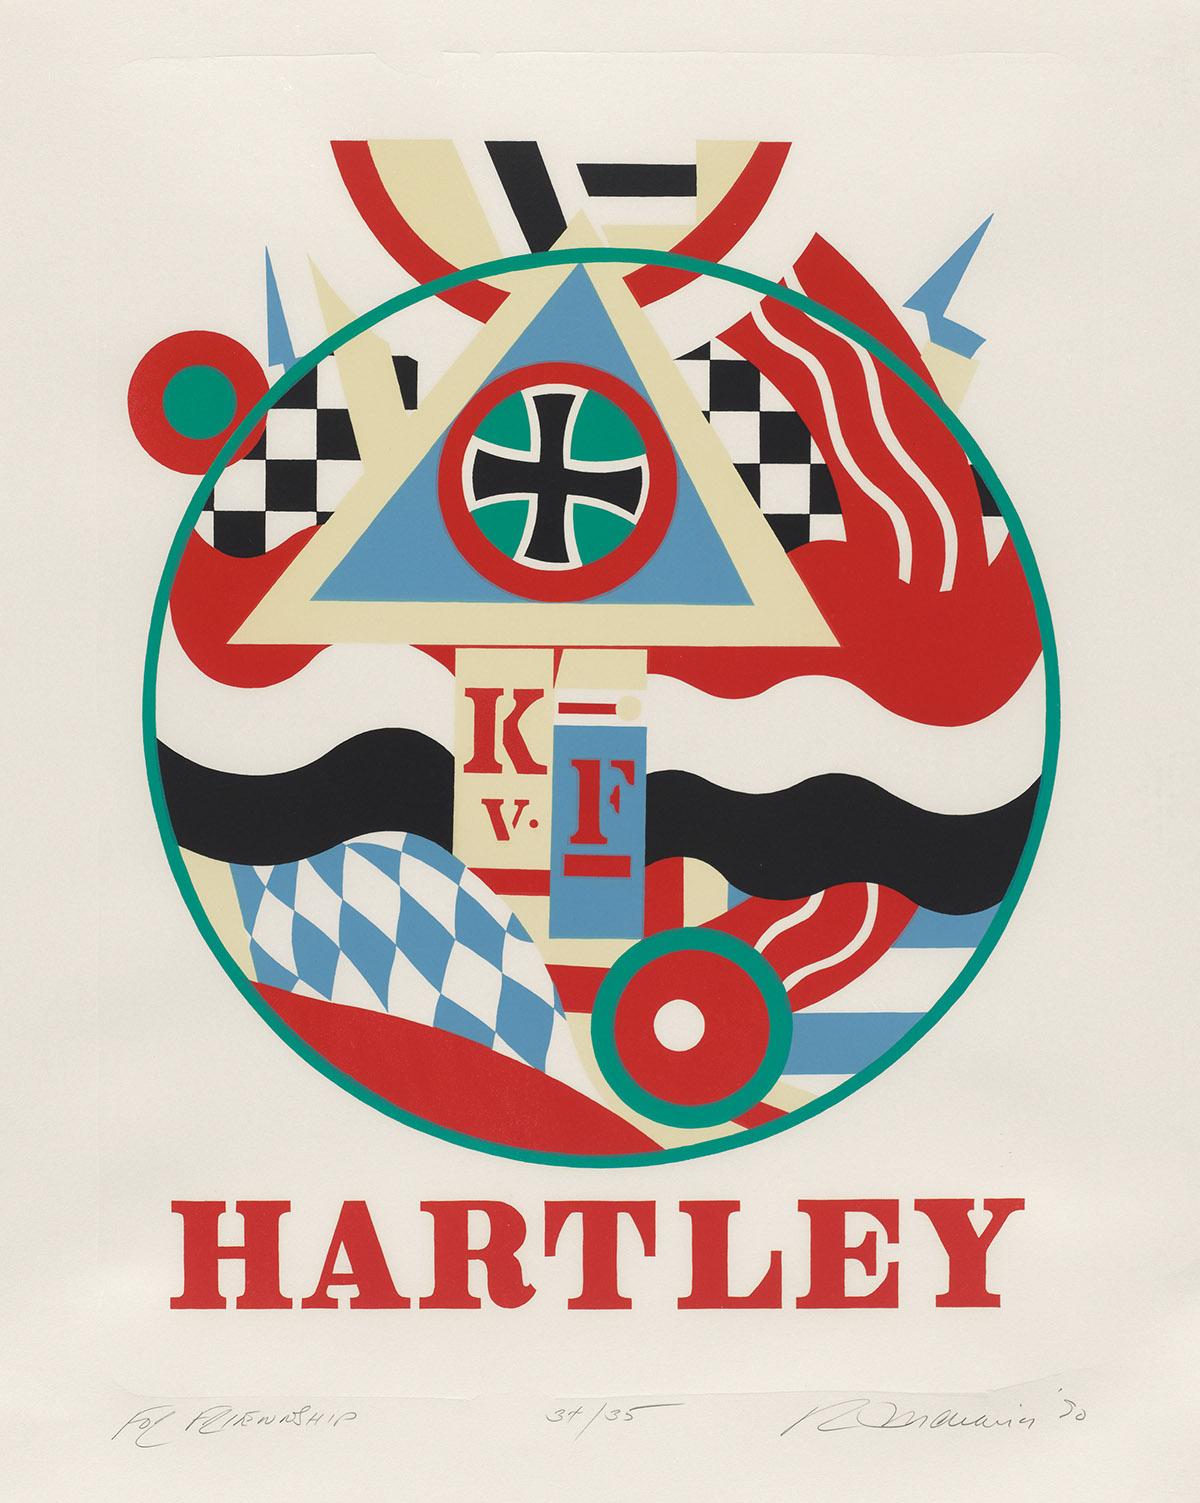 Hartley Elegies: For Friendship